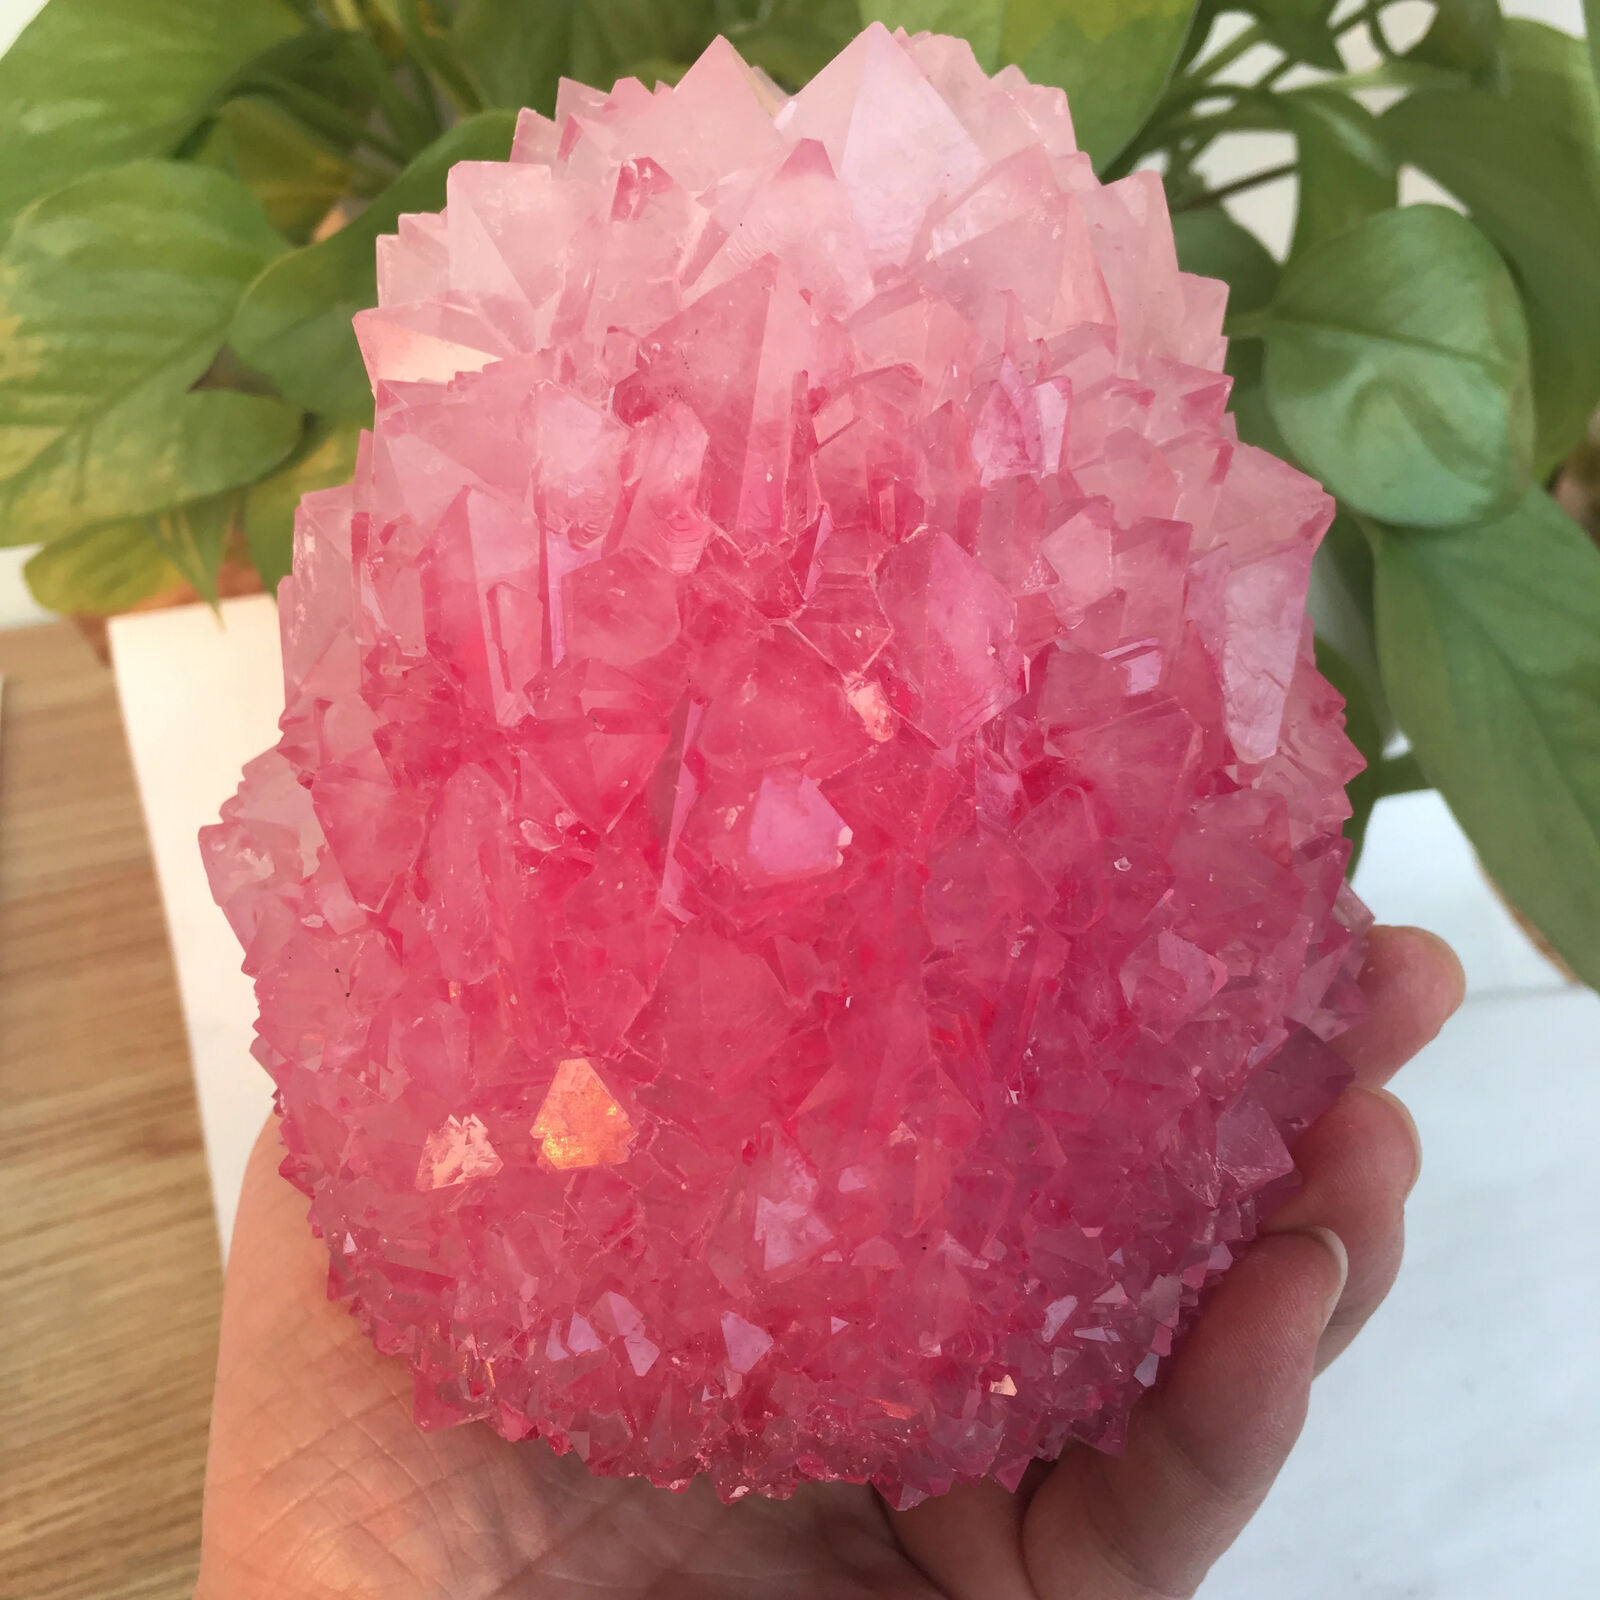 Beautiful Rose colored Quartz Crystal Cluster Specimen Energy Stone